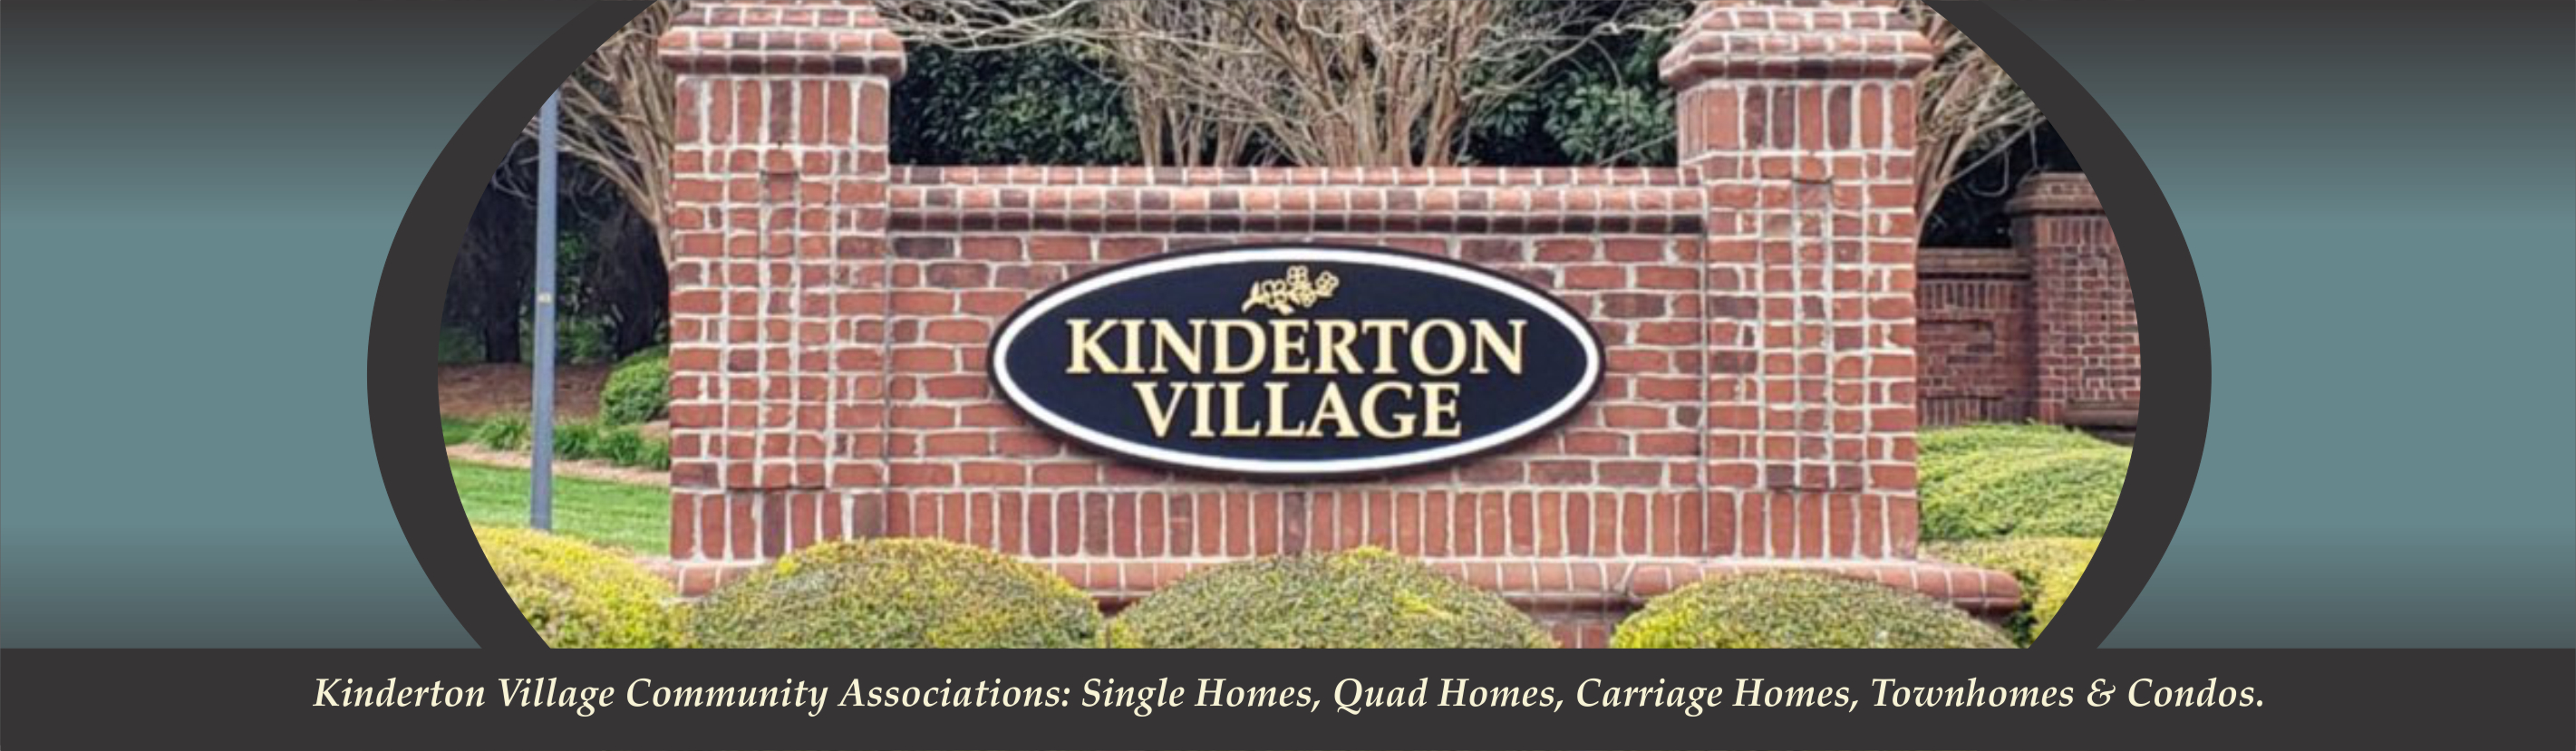 kinderton village banner.jpg